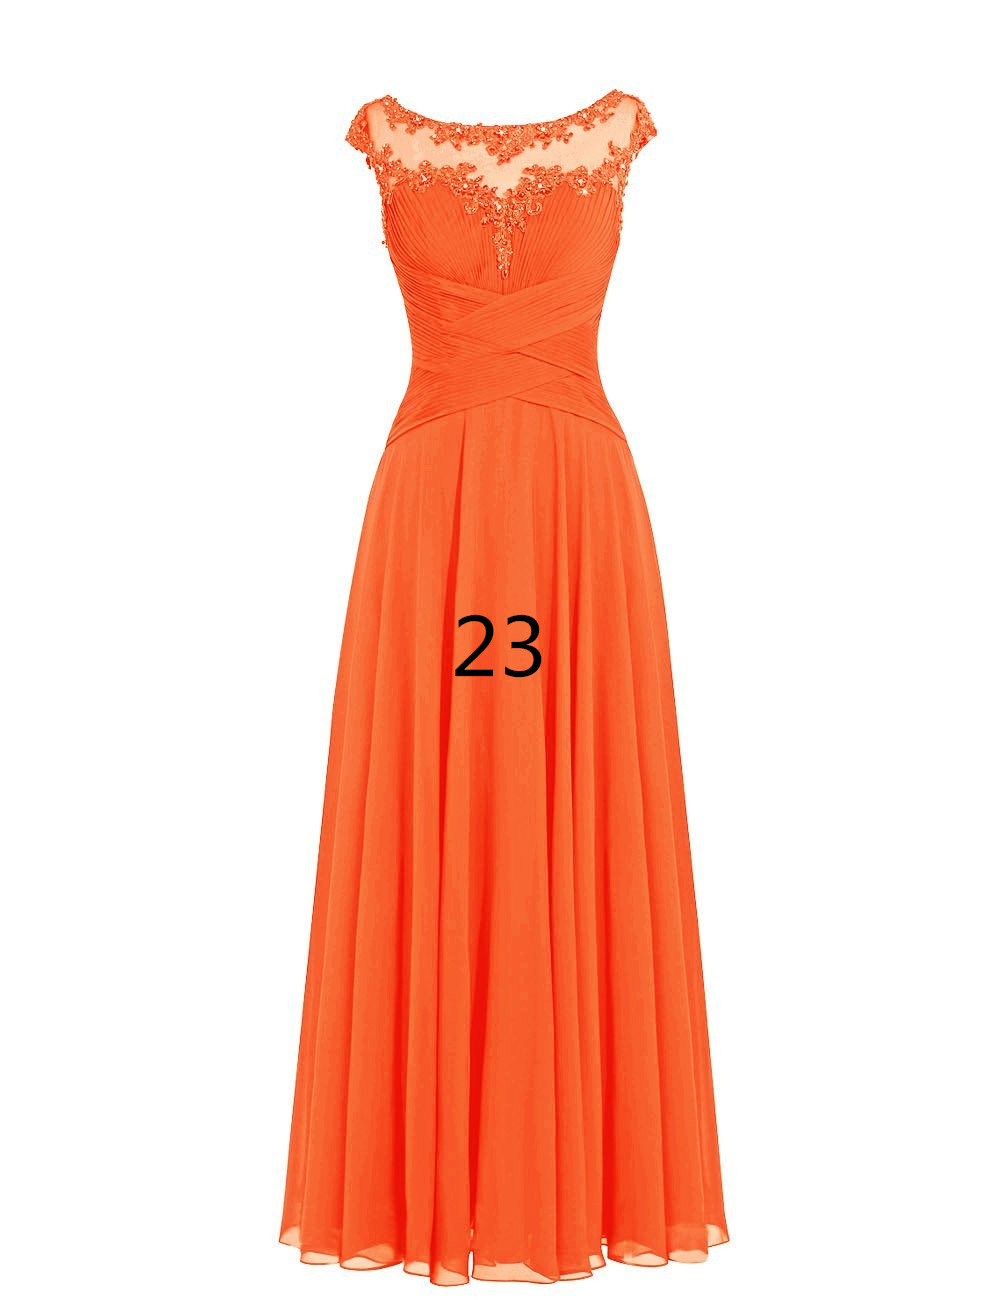 Women Sleveless Embroidered Chiffon Bridesmaid Dress Long Party Pageant Wedding Formal Dress - Orange